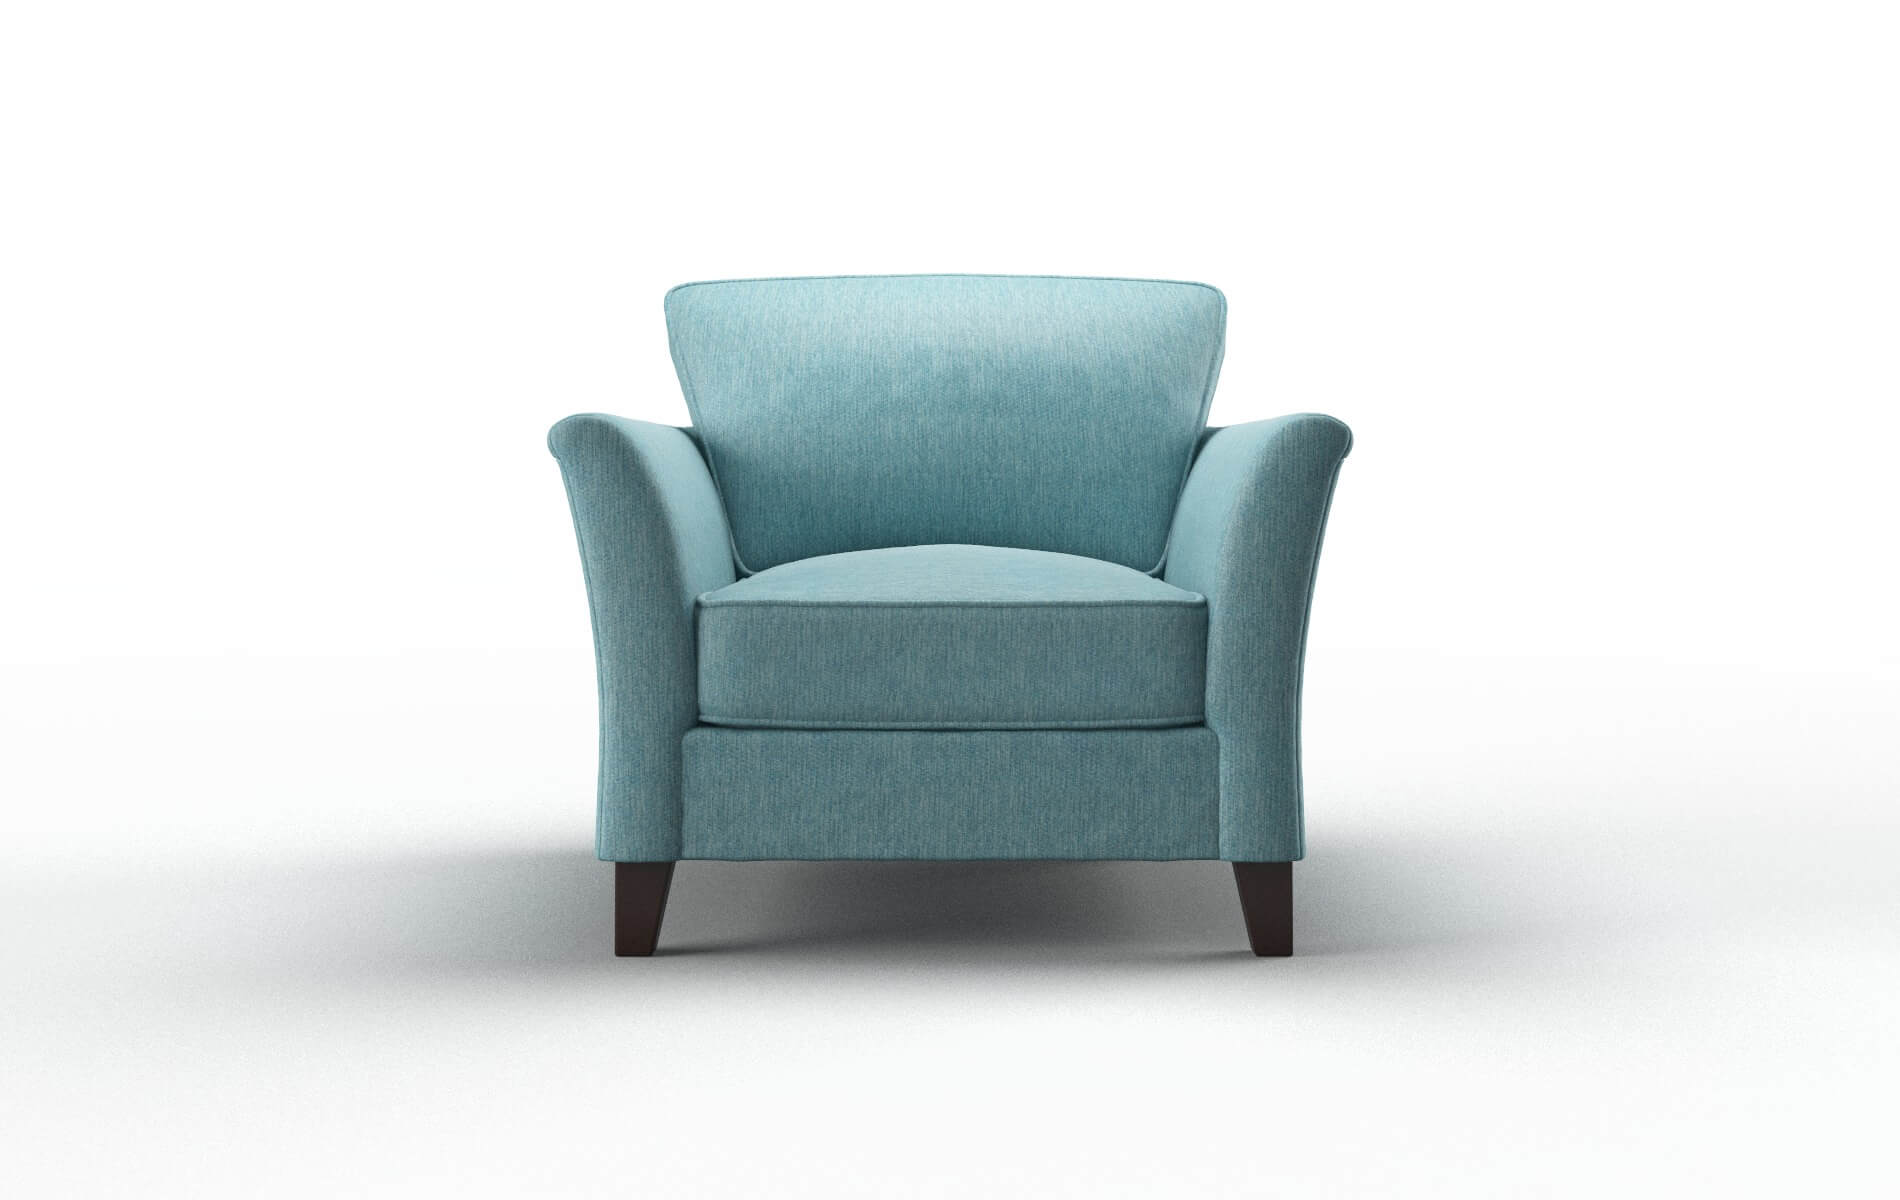 Cologne Cosmo Turquoise Chair espresso legs 1